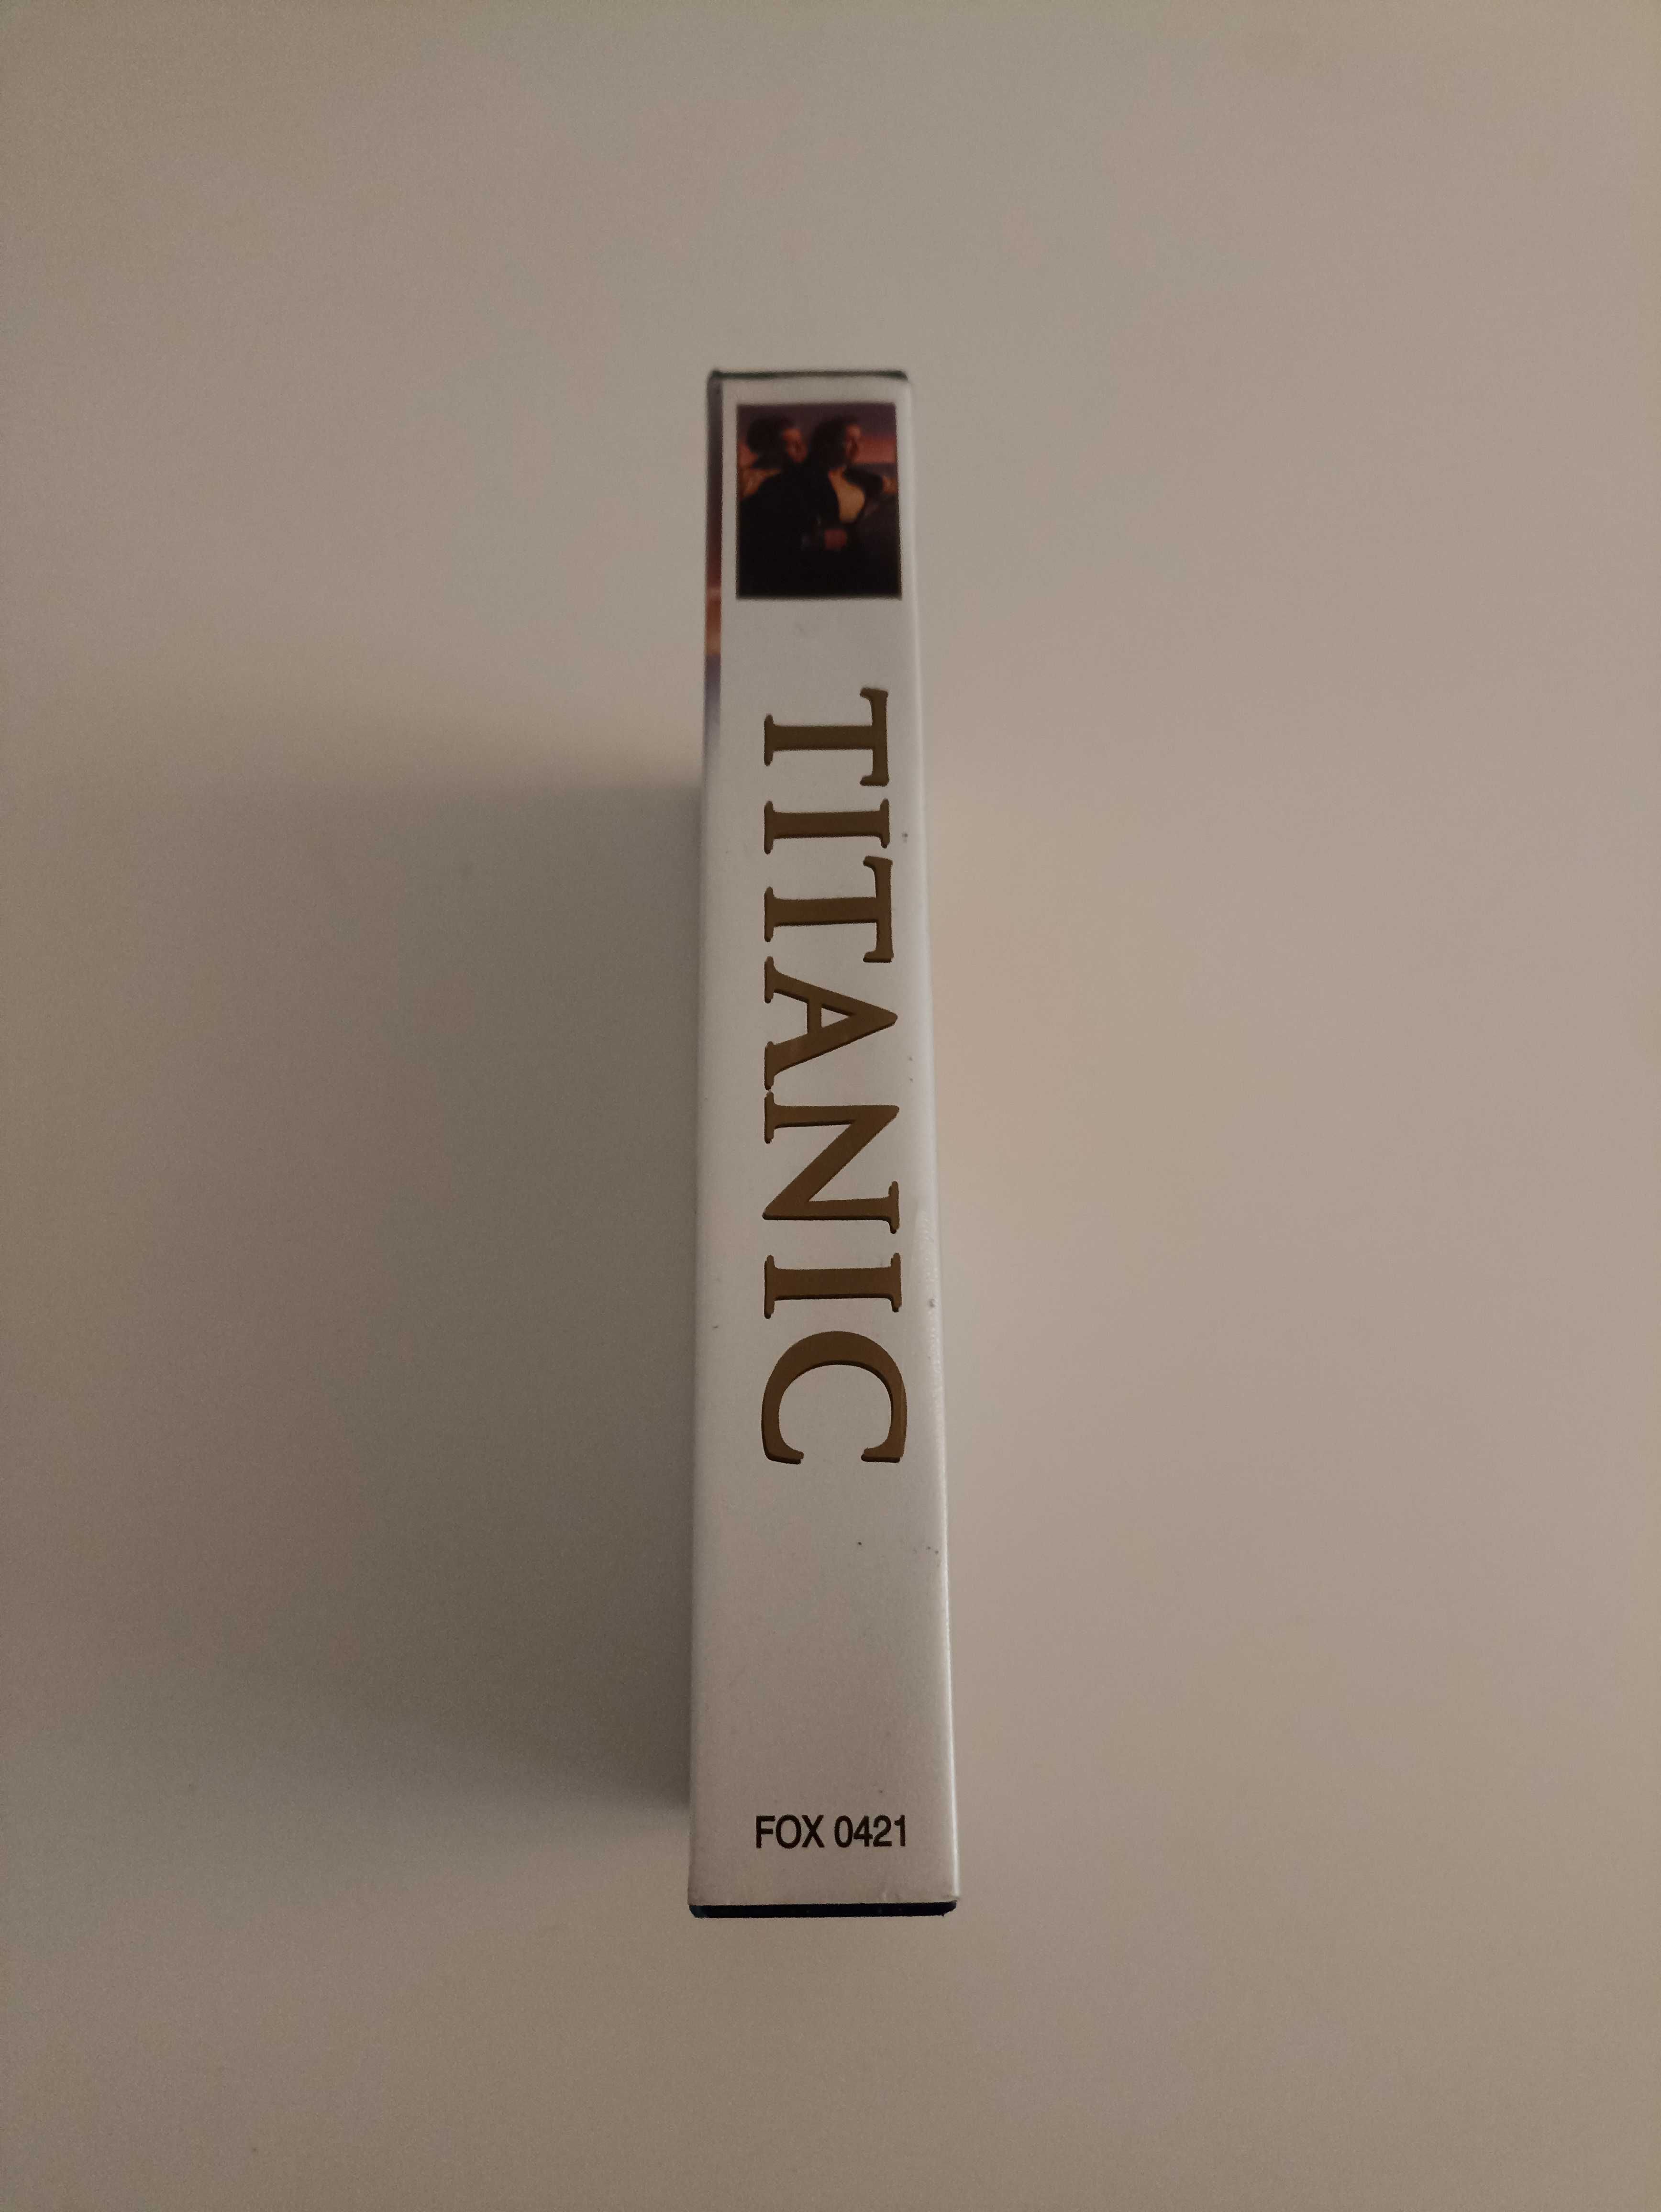 Titanic - film, kaseta VHS